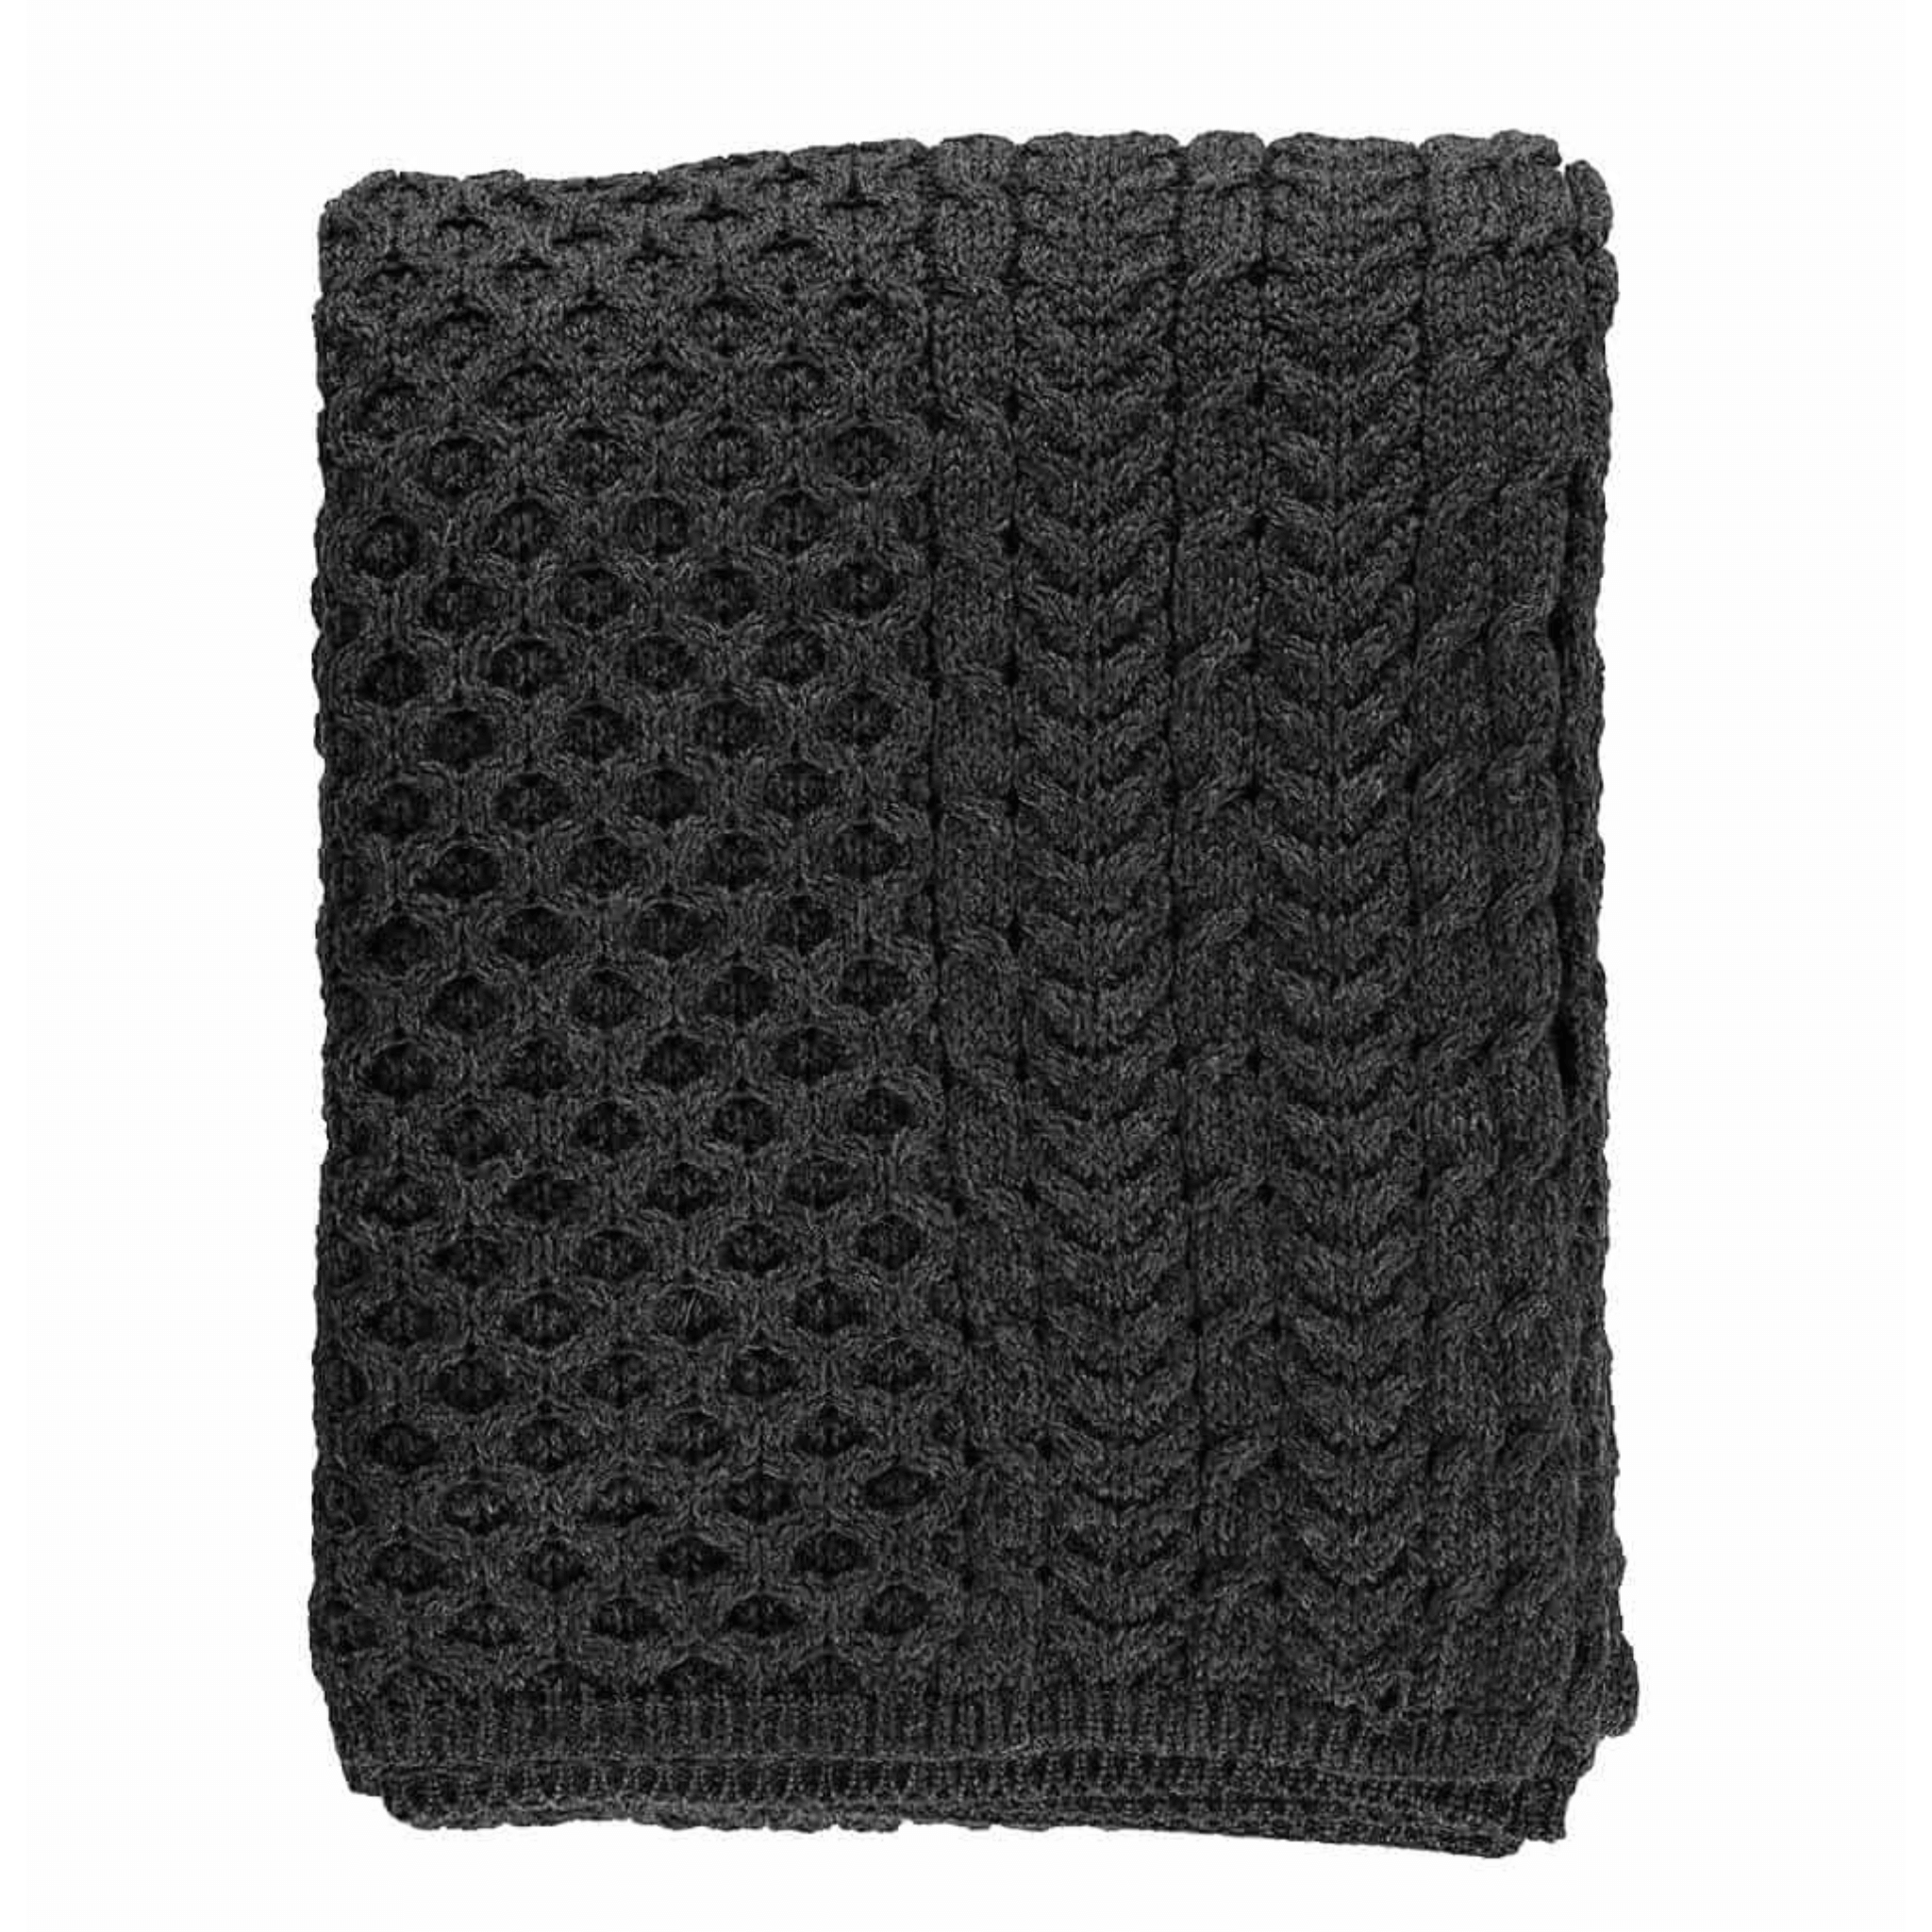 Charcoal Grey 100% Merino Wool Maria Knitted Throw (180cm x 140cm)